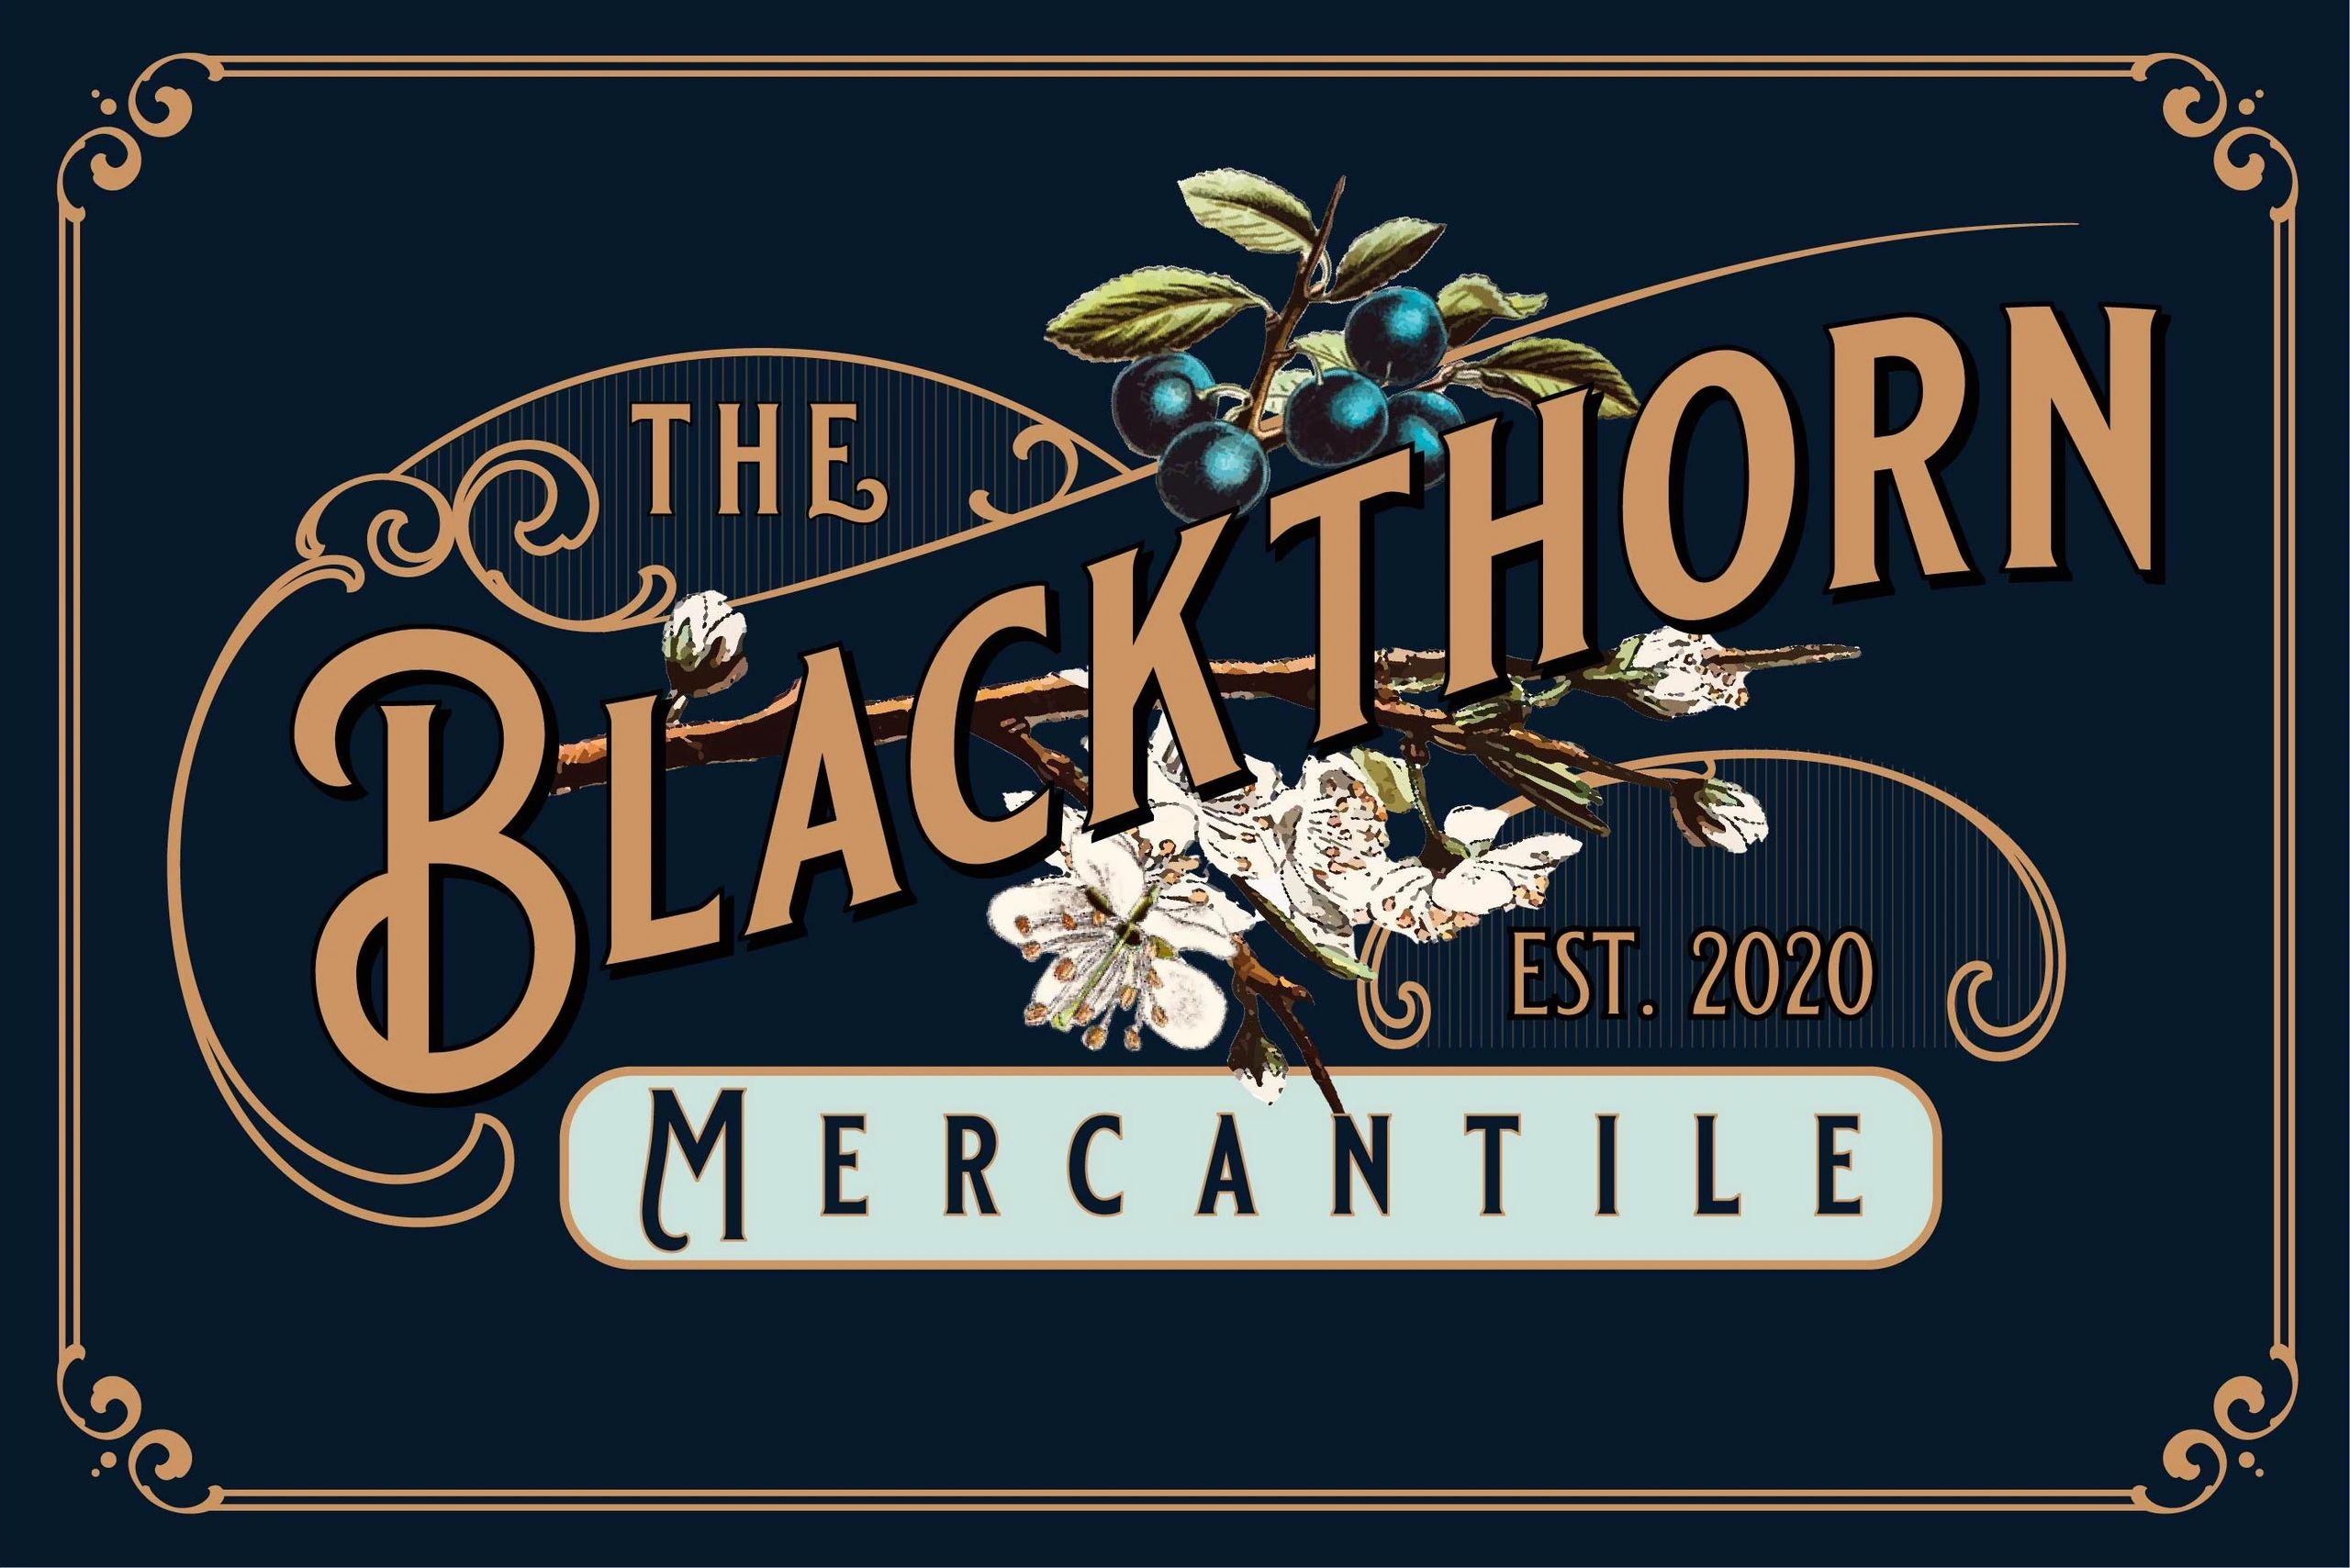 Blackthorn Mercantile